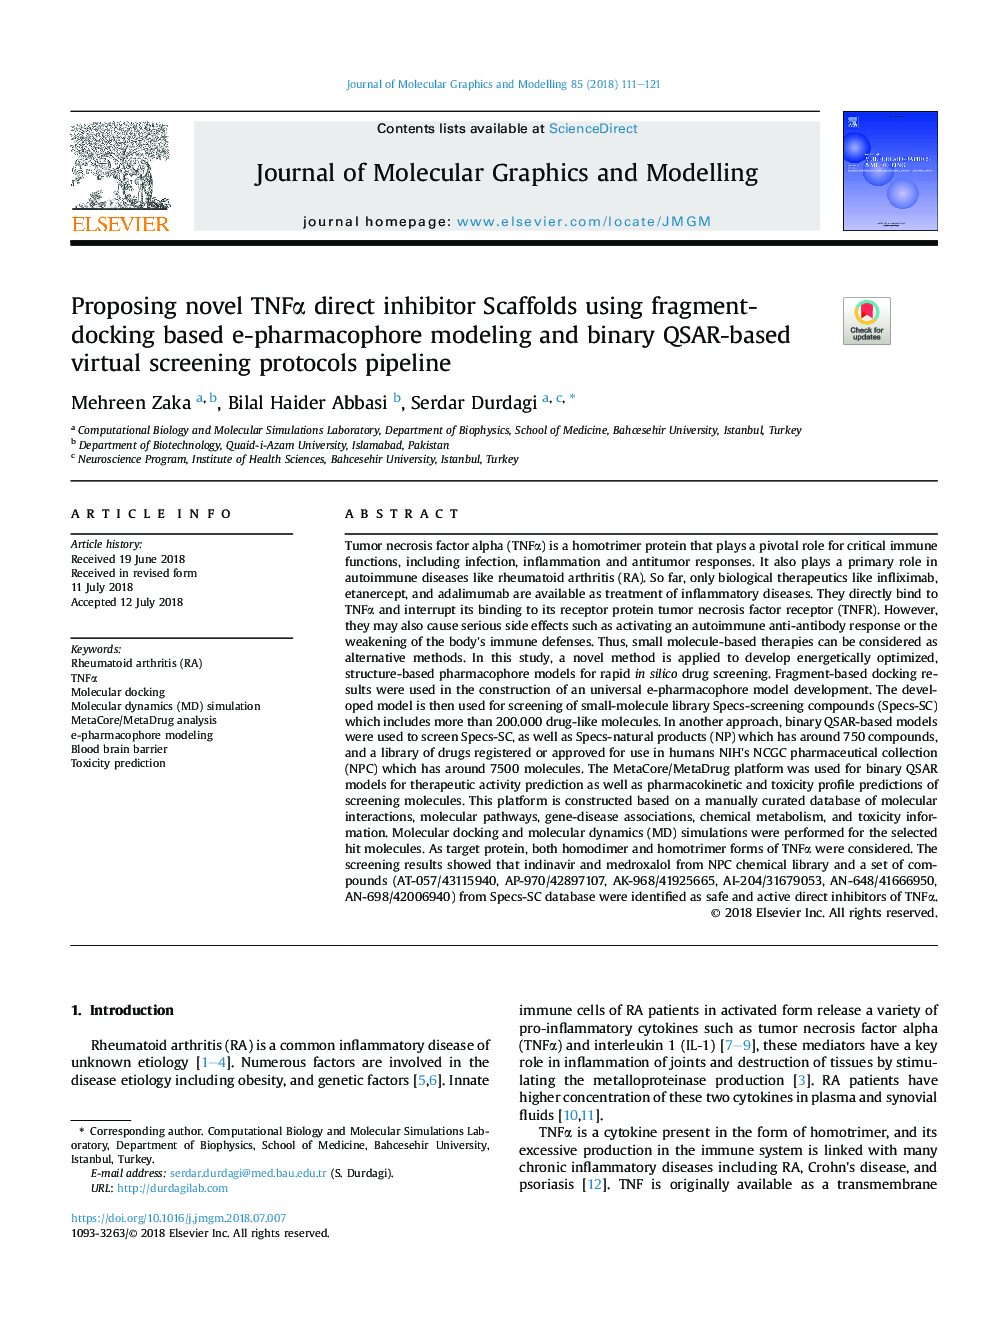 Proposing novel TNFÎ± direct inhibitor Scaffolds using fragment-docking based e-pharmacophore modeling and binary QSAR-based virtual screening protocols pipeline